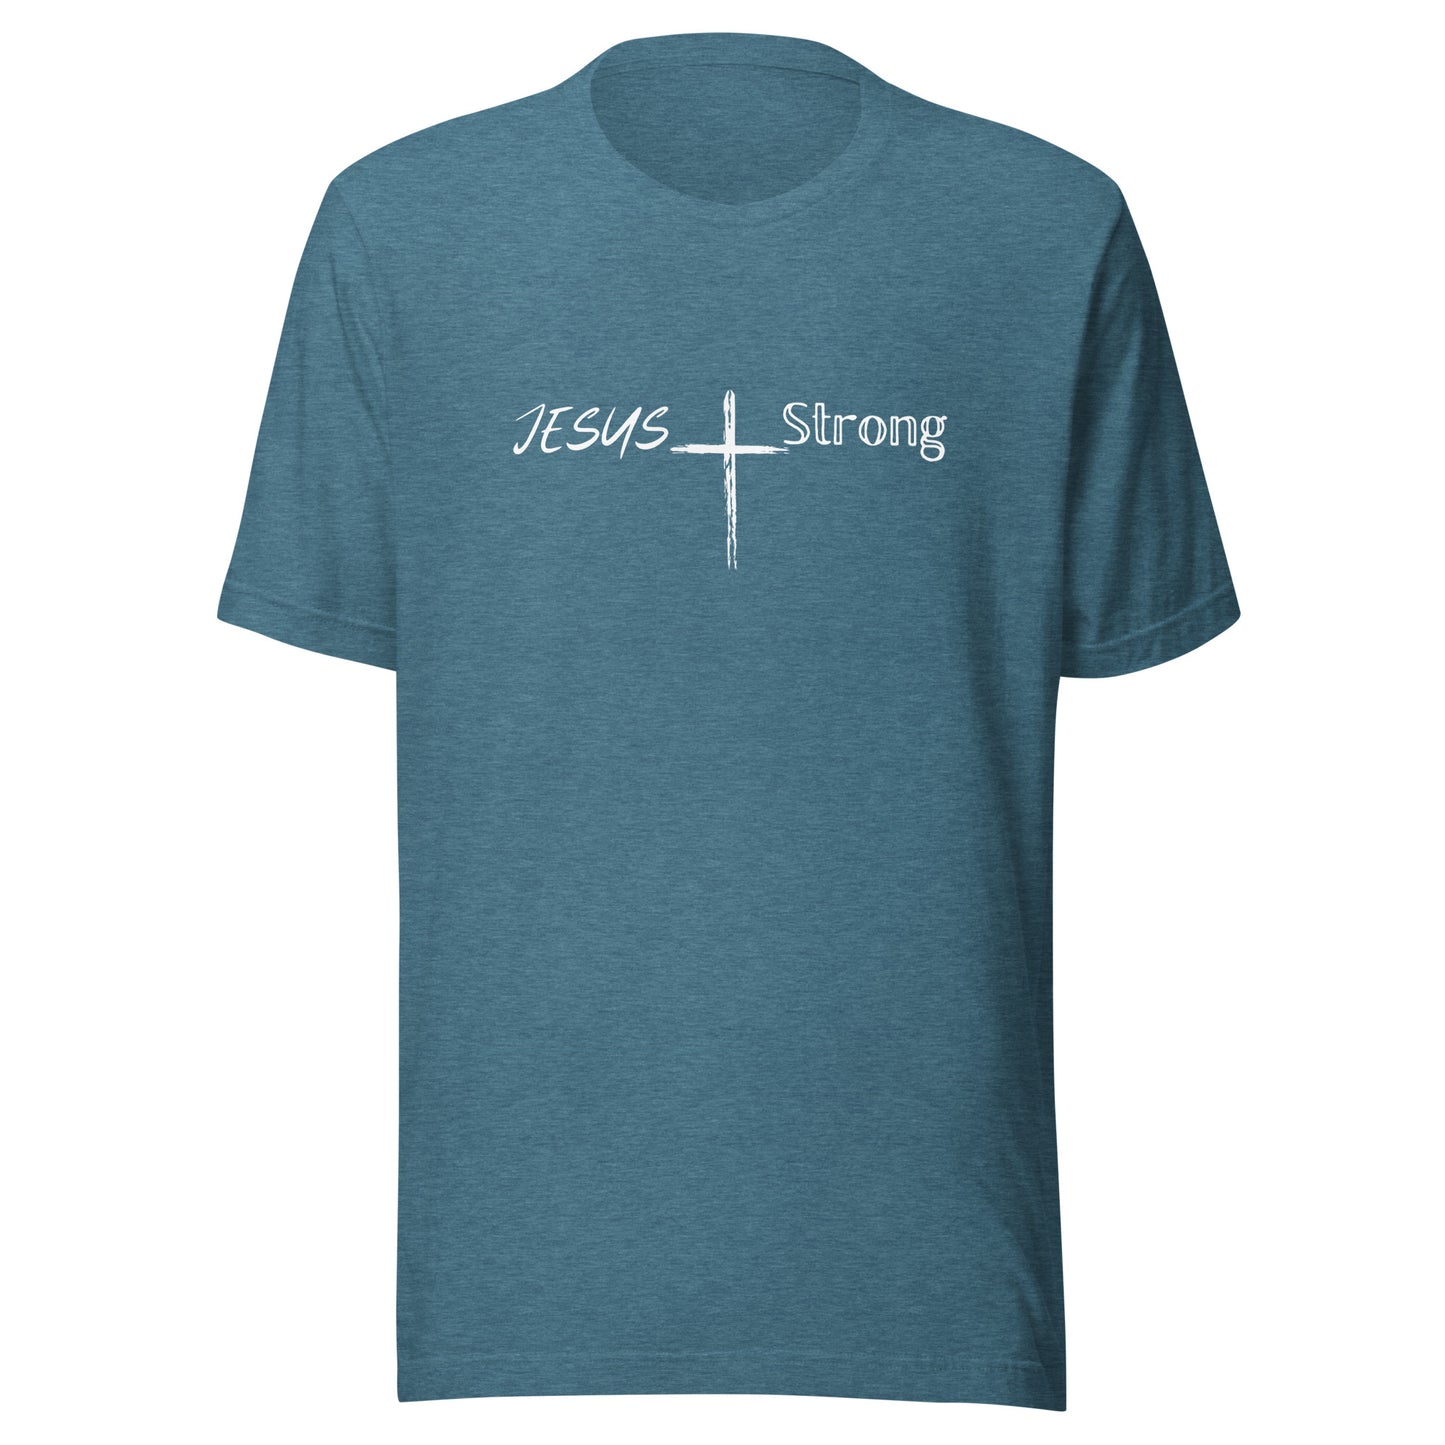 Jesus Strong T-Shirt